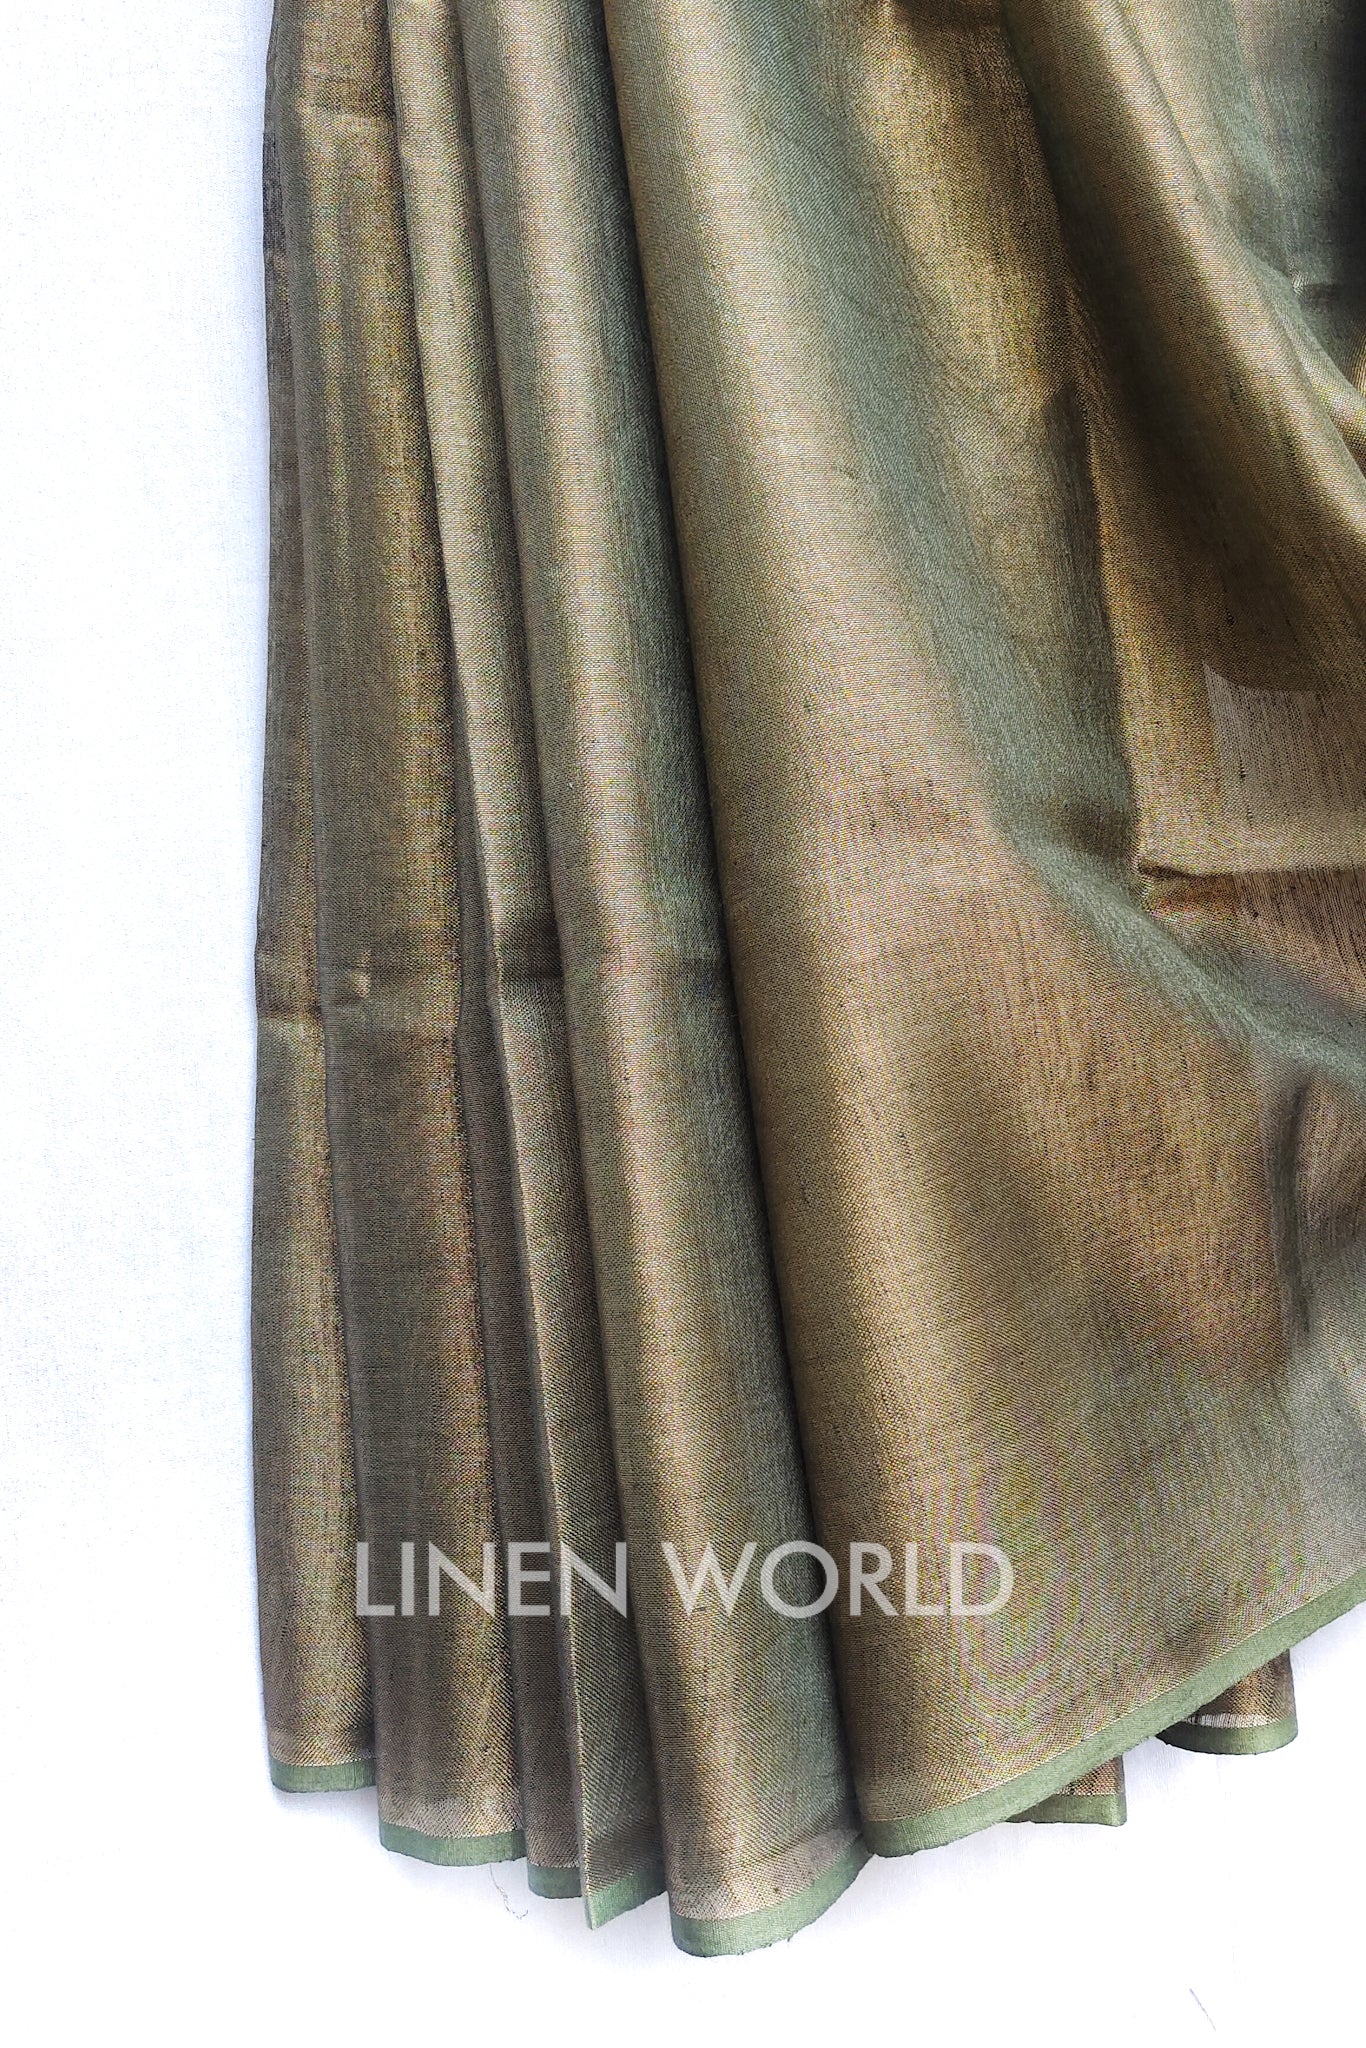 egwene - olive green zari linen sari - linenworldonline.in